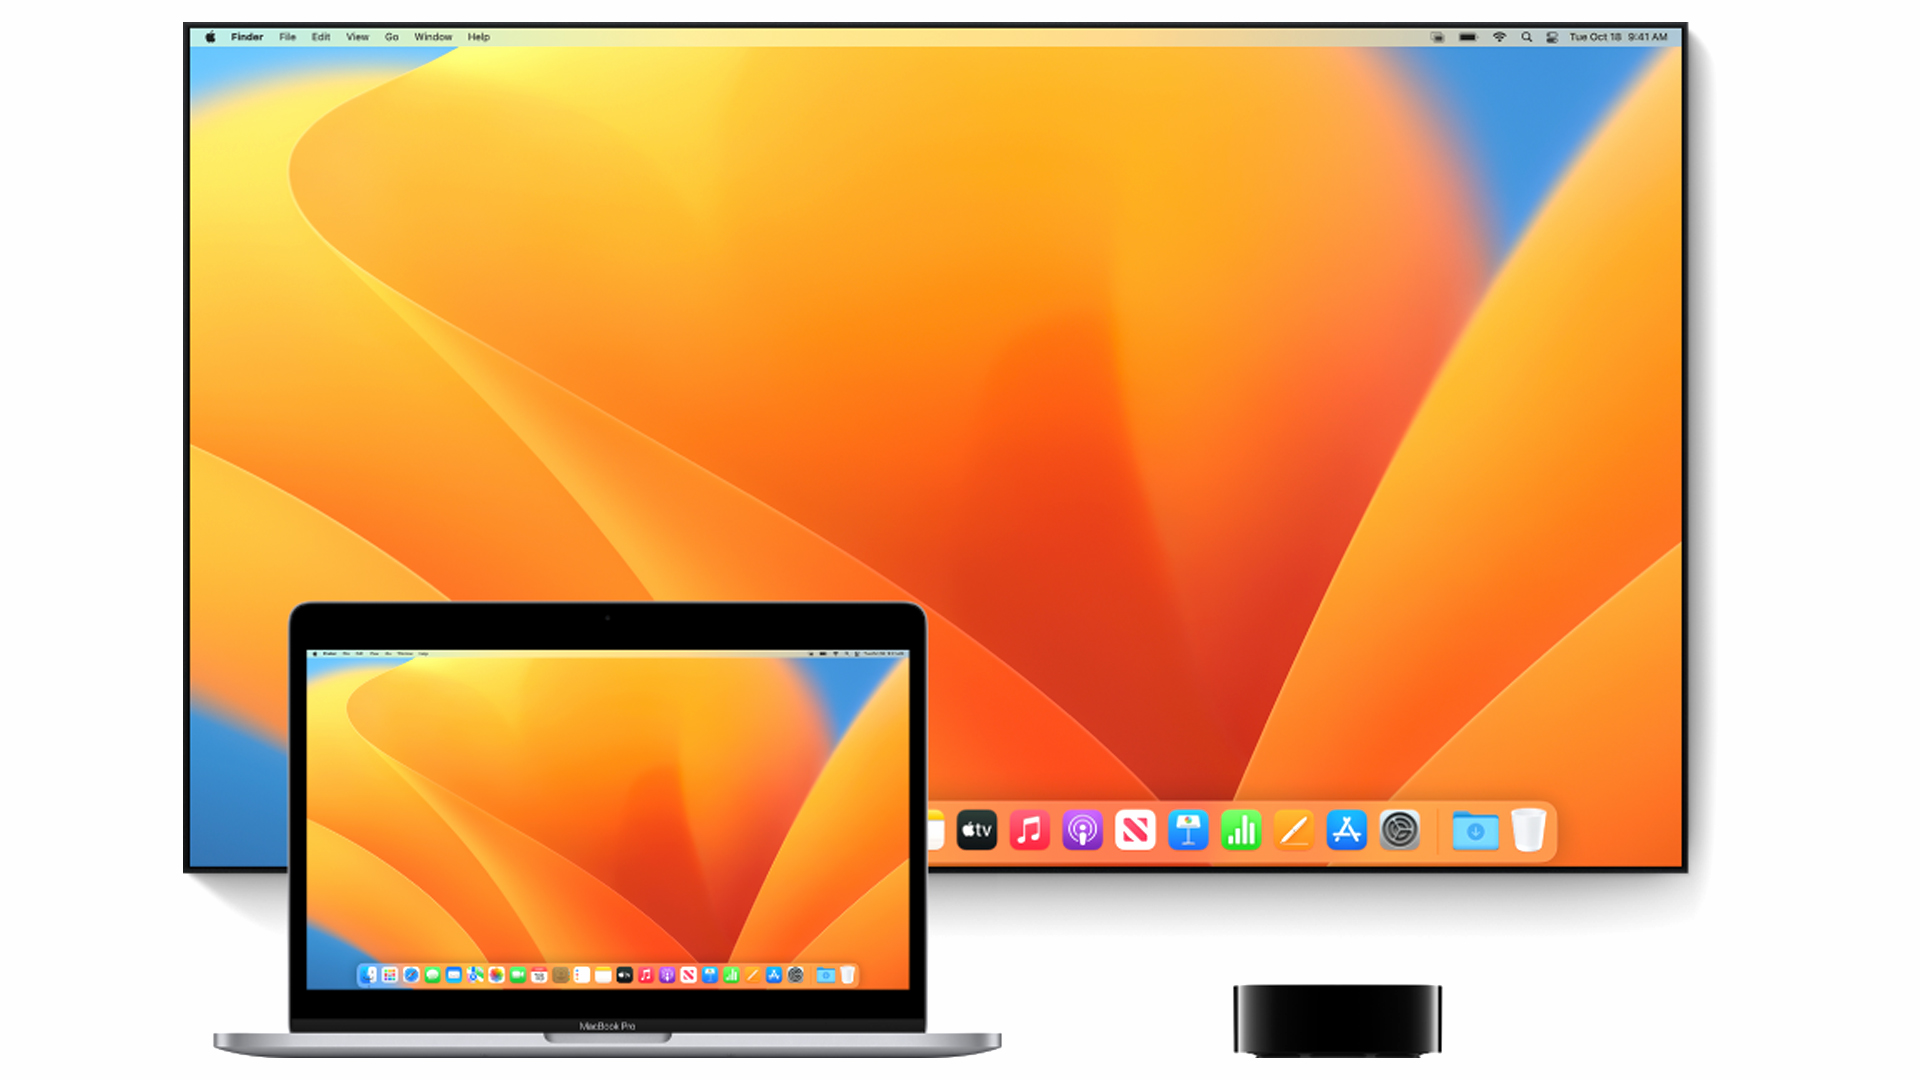 macOS Ventura mirrored on an Apple TV 4K